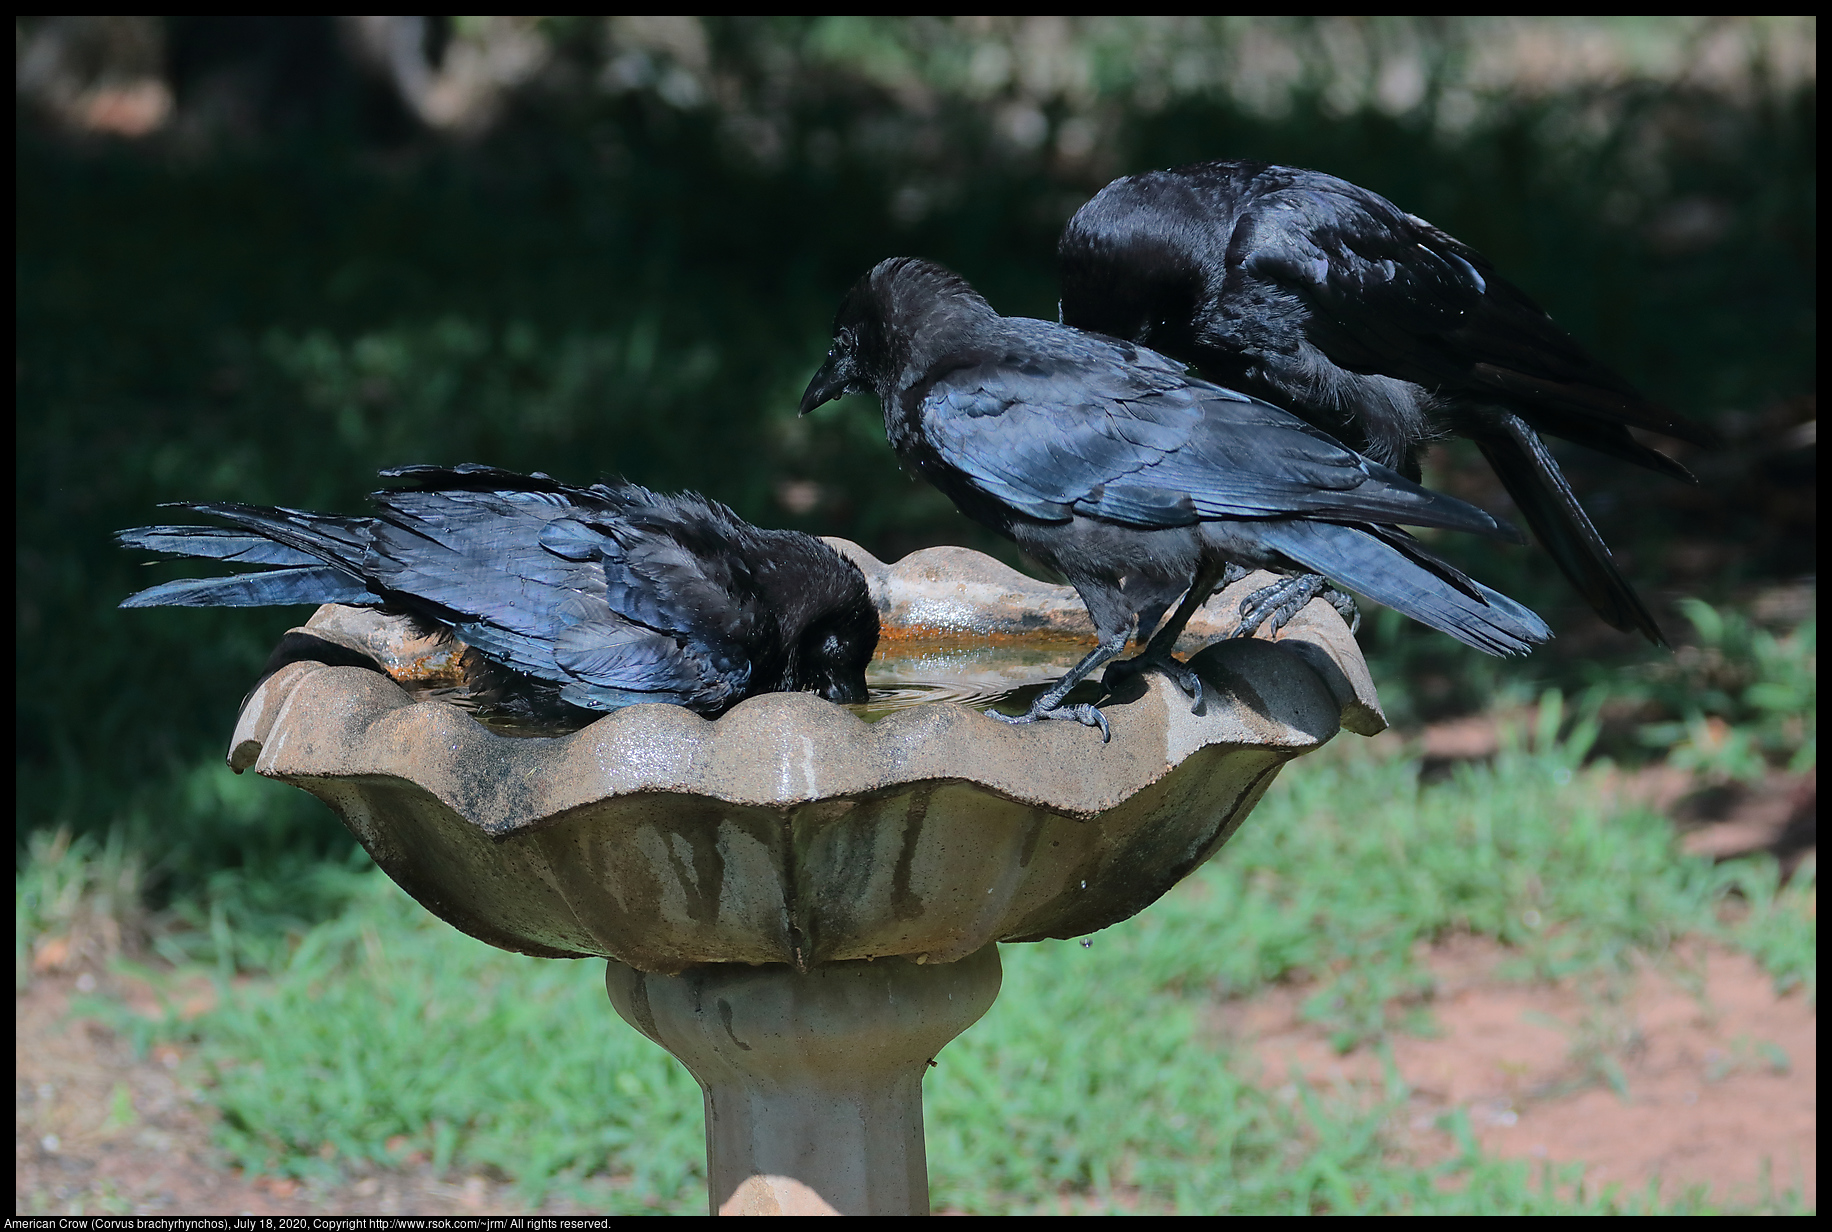 American Crow (Corvus brachyrhynchos), July 18, 2020